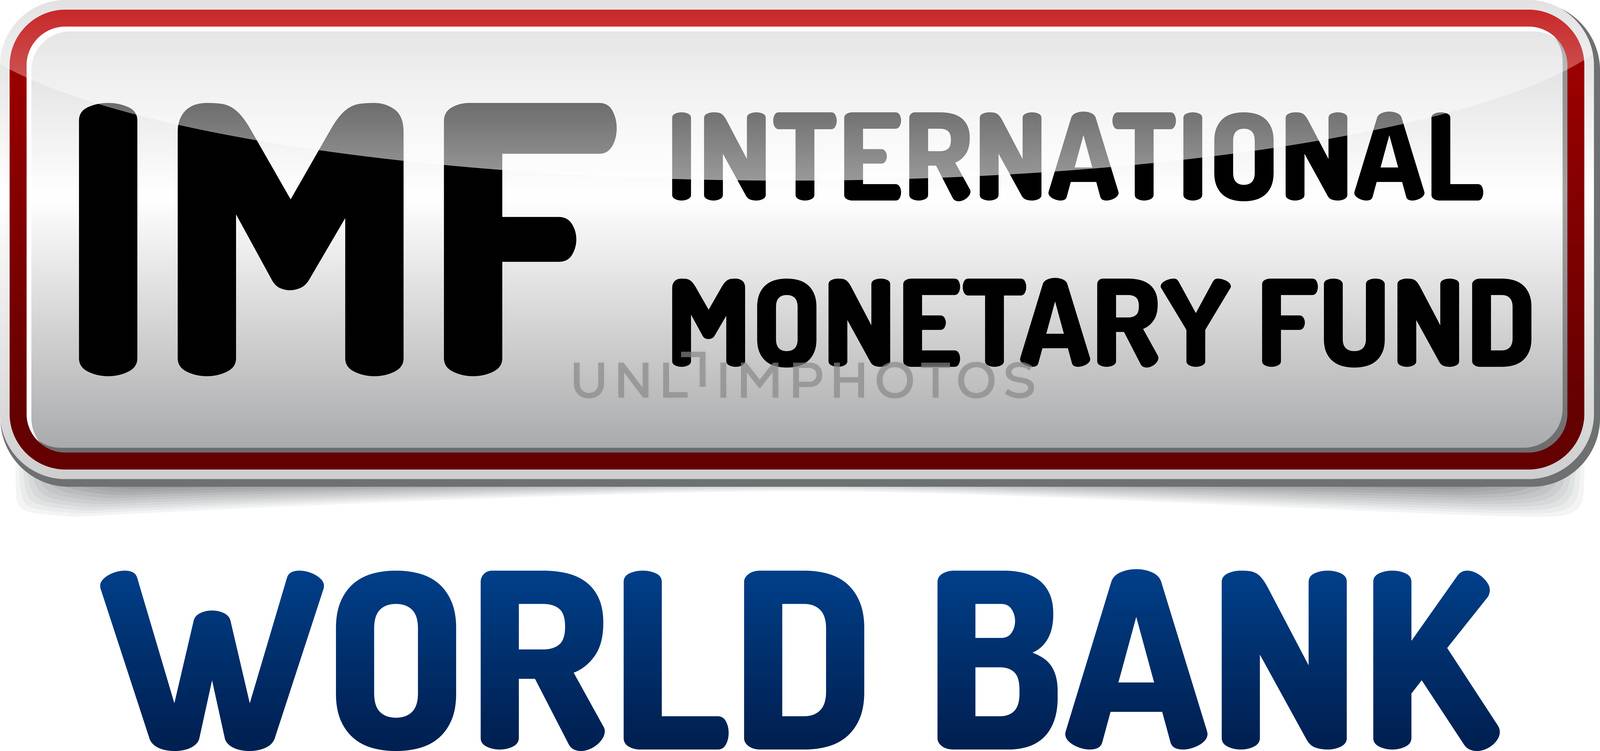 IMF International Monetary Fund, World Bank by akaprinay